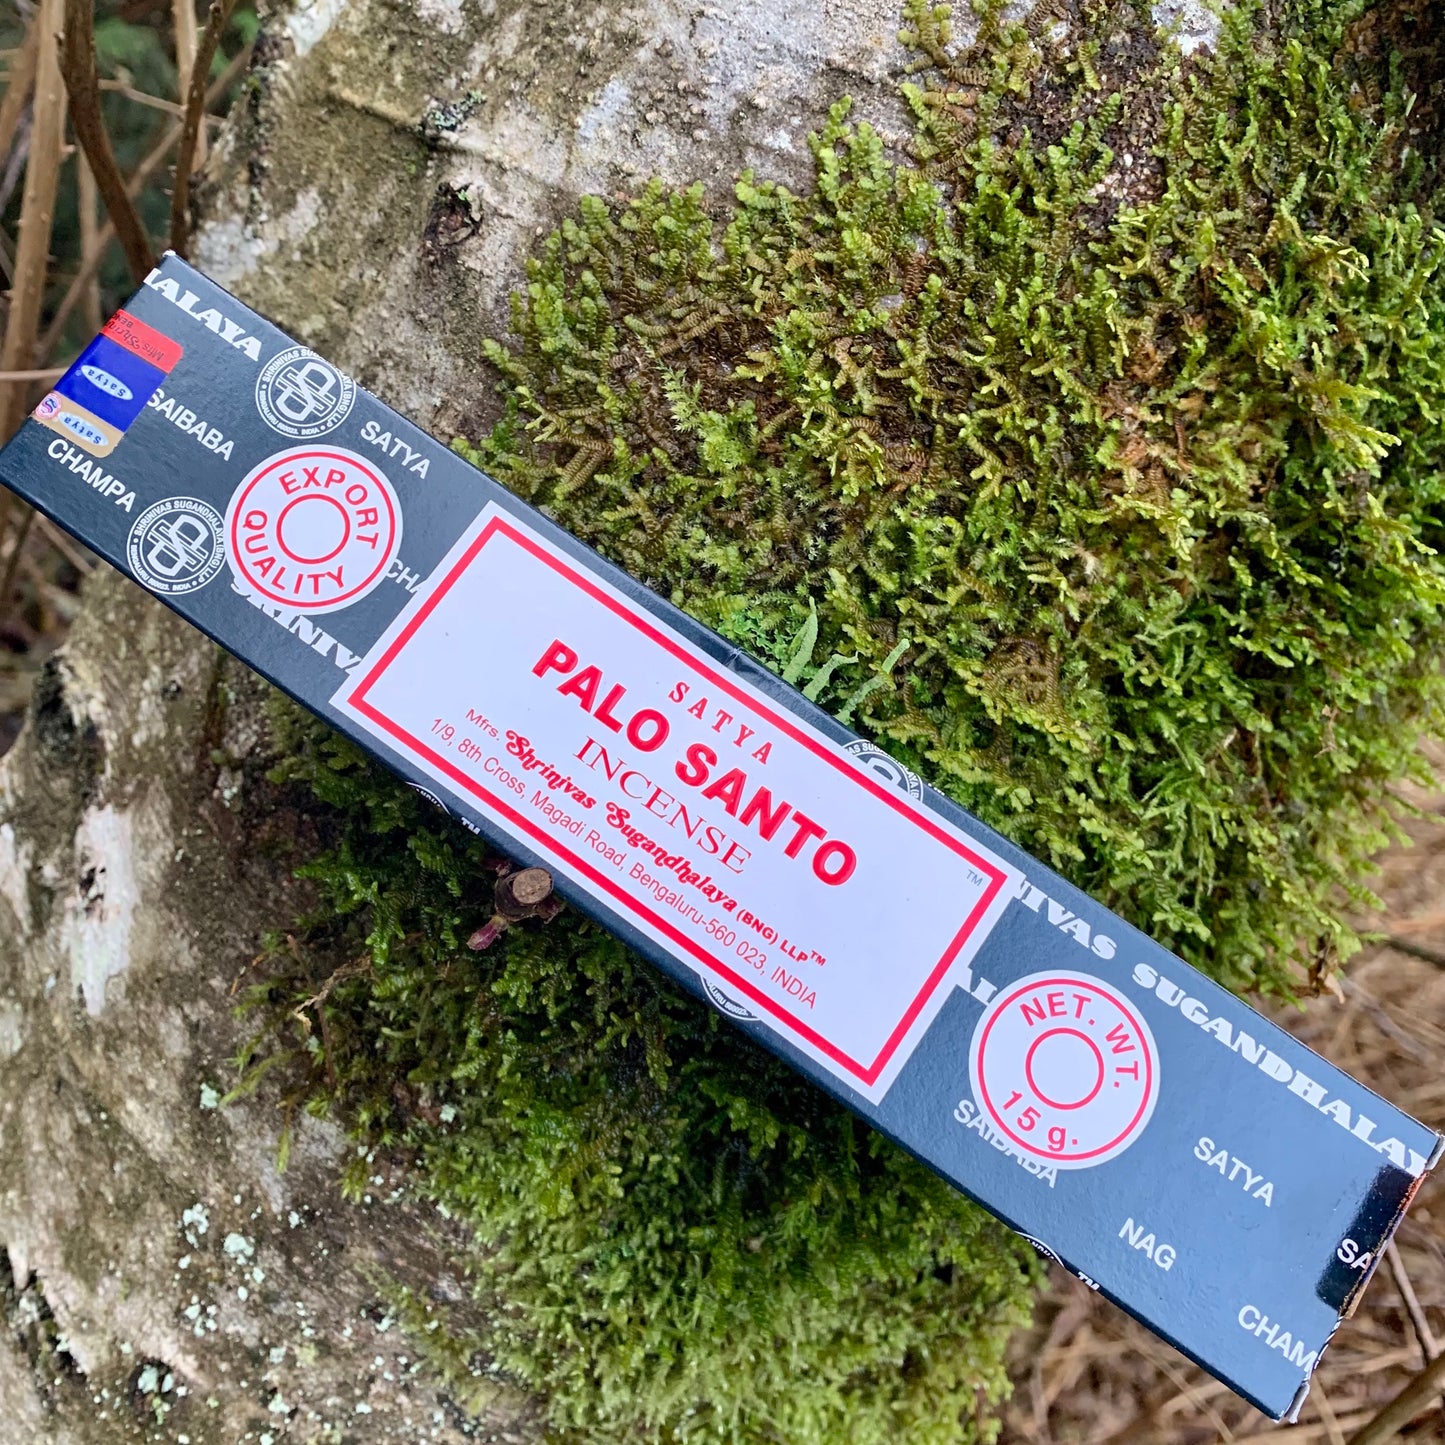 Palo Santo Incense sticks- All Natural Hand Rolled Incense Sticks